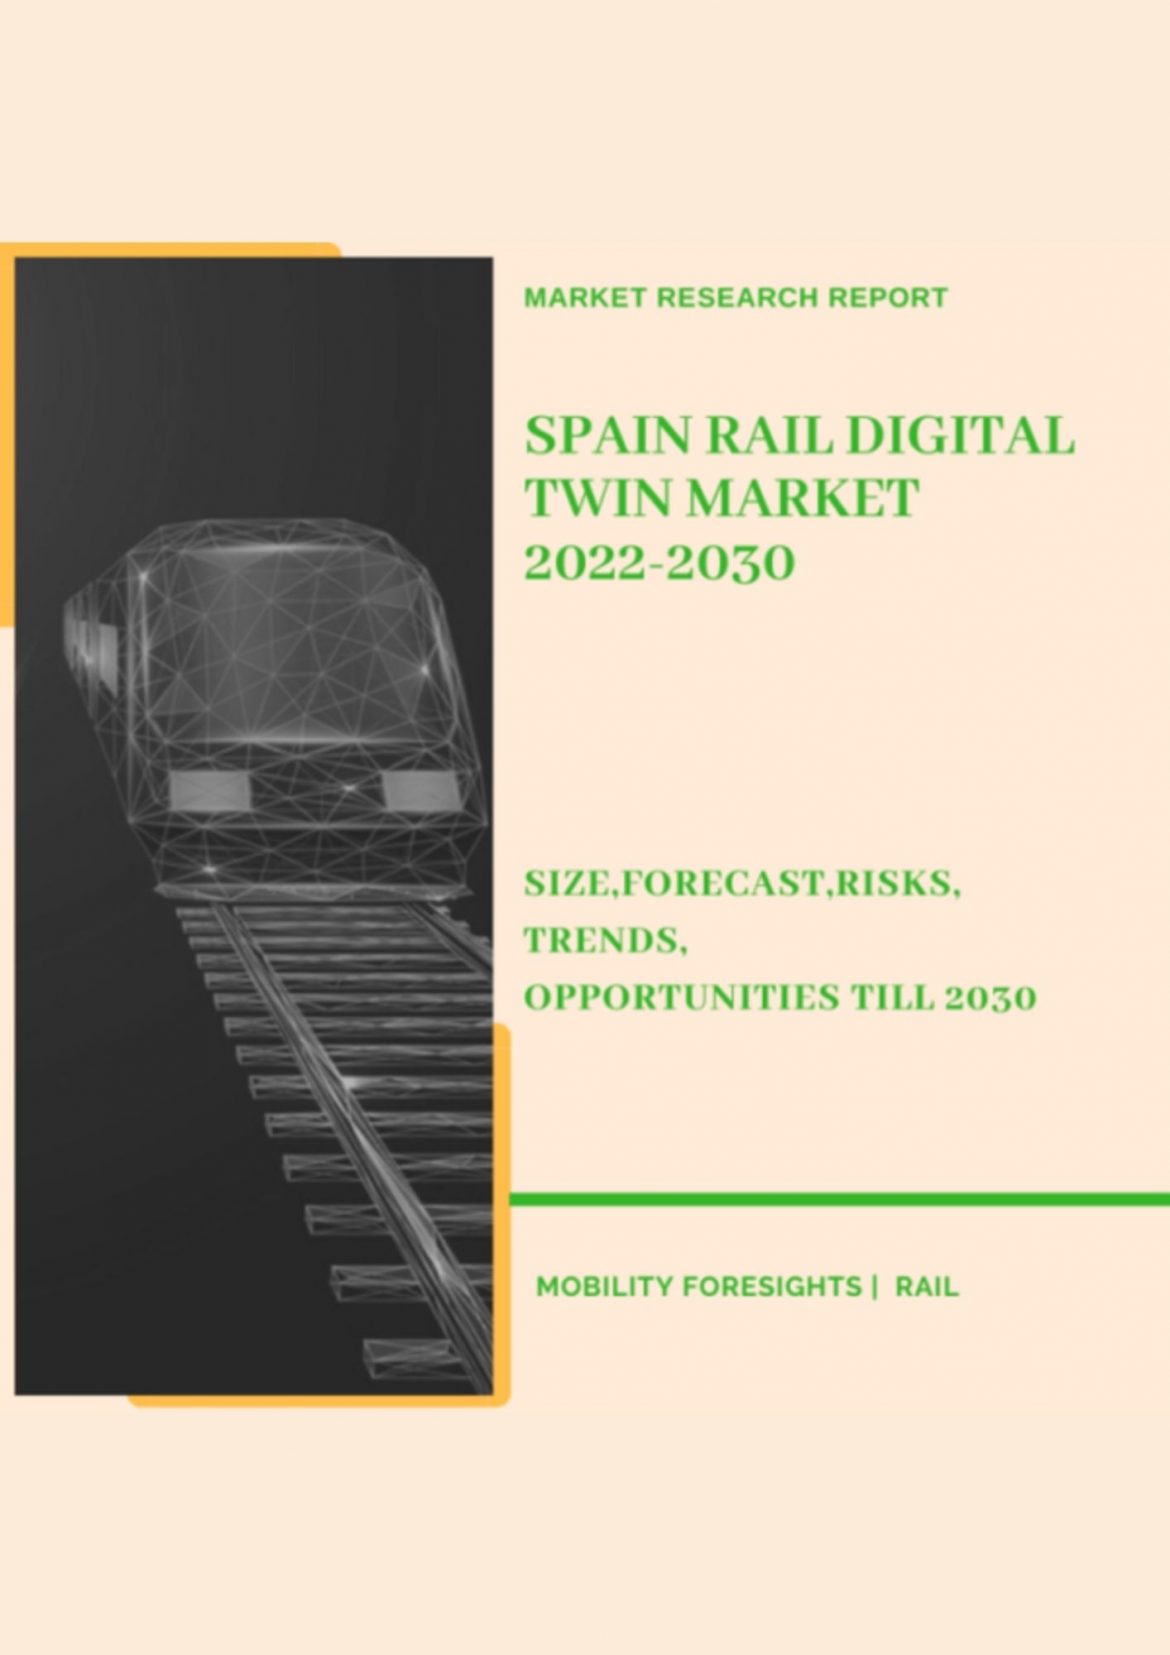 Spain Rail Digital Twin Market 2022-2030